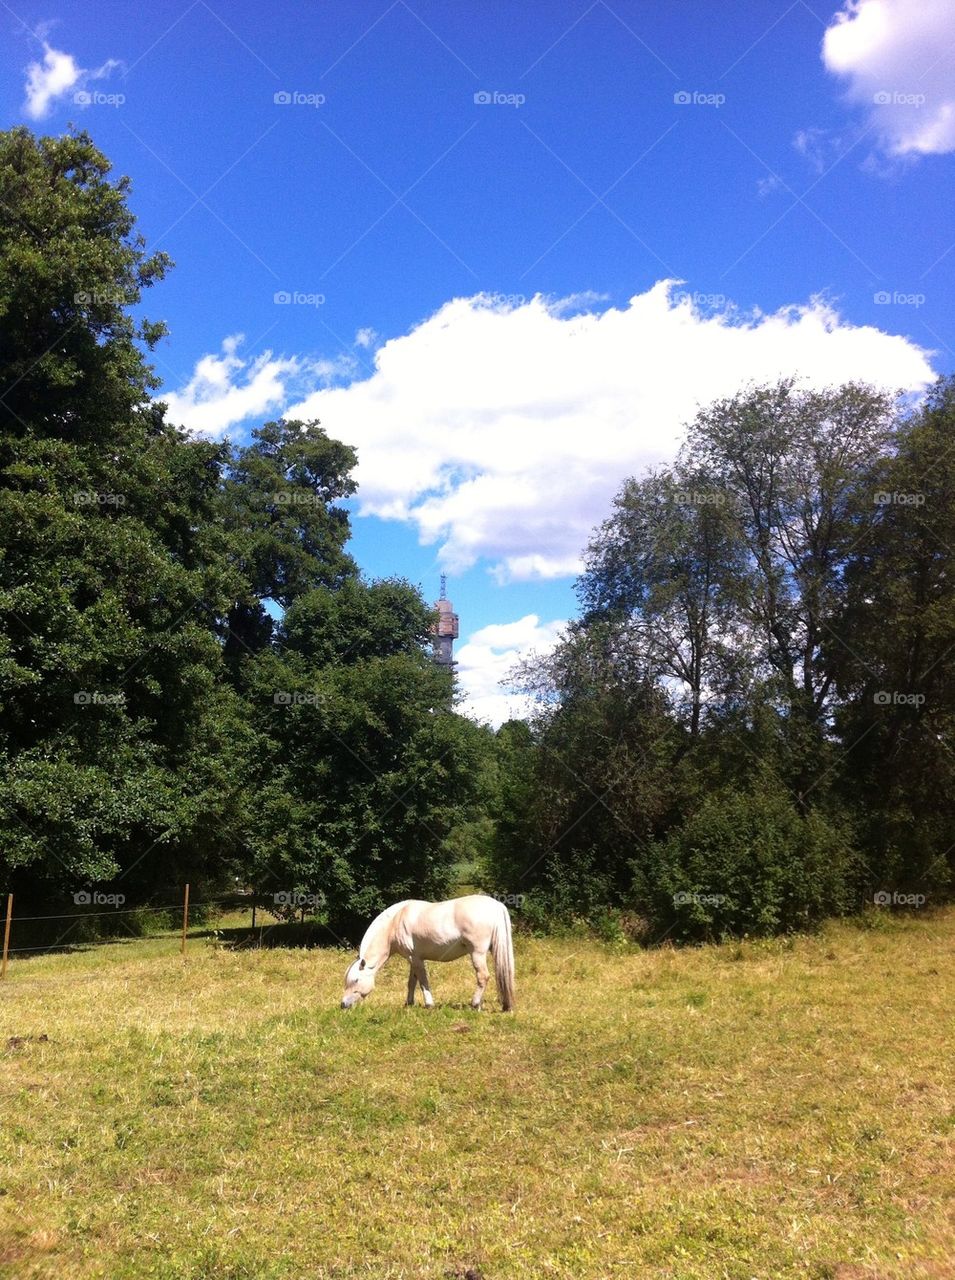 summer horse blue sky greenery by zea7